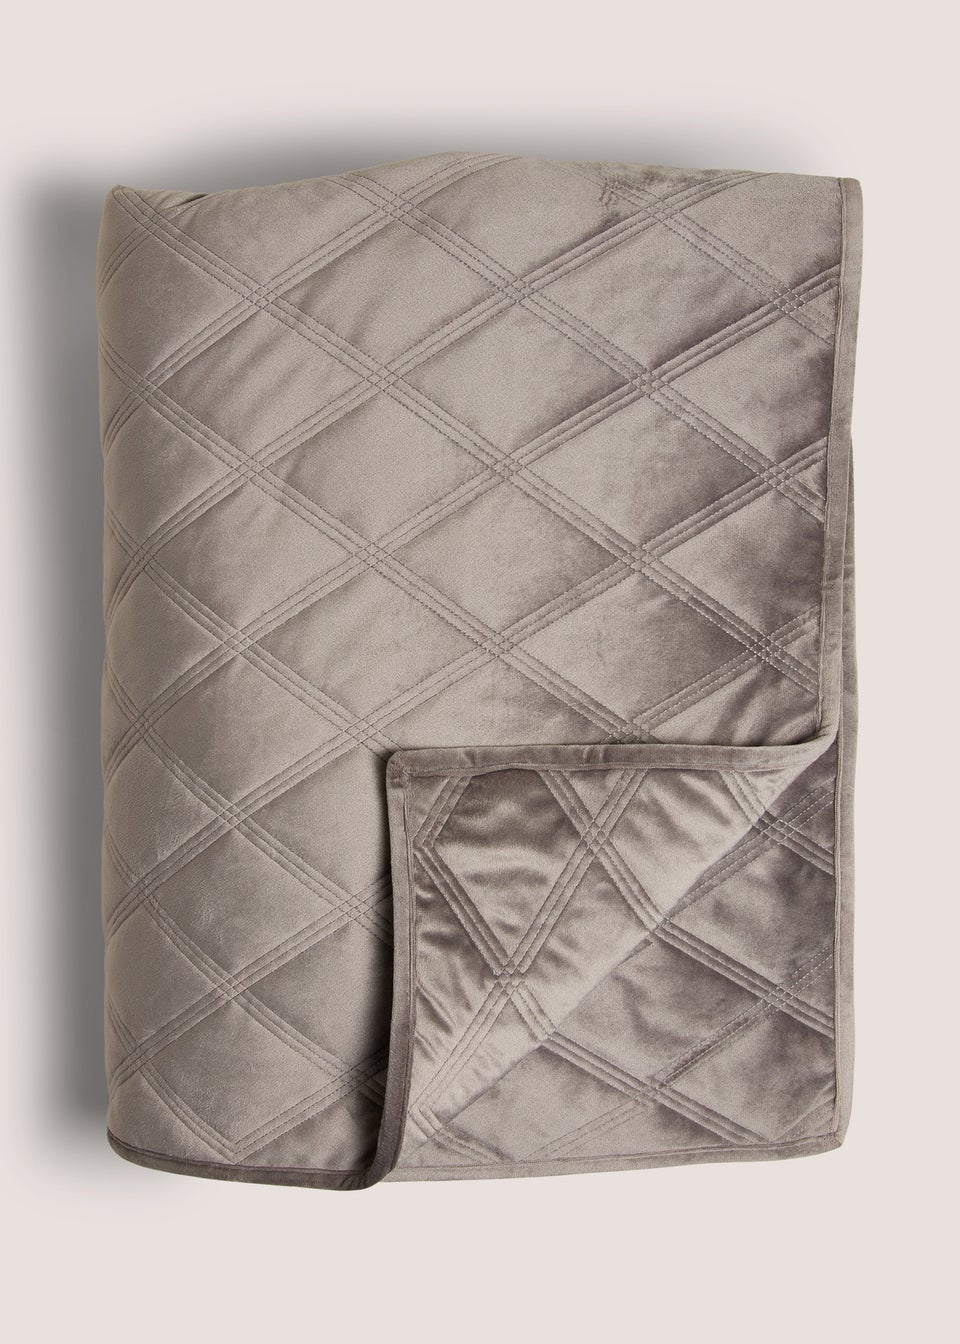 Charcoal Velvet Quilted Bedspread